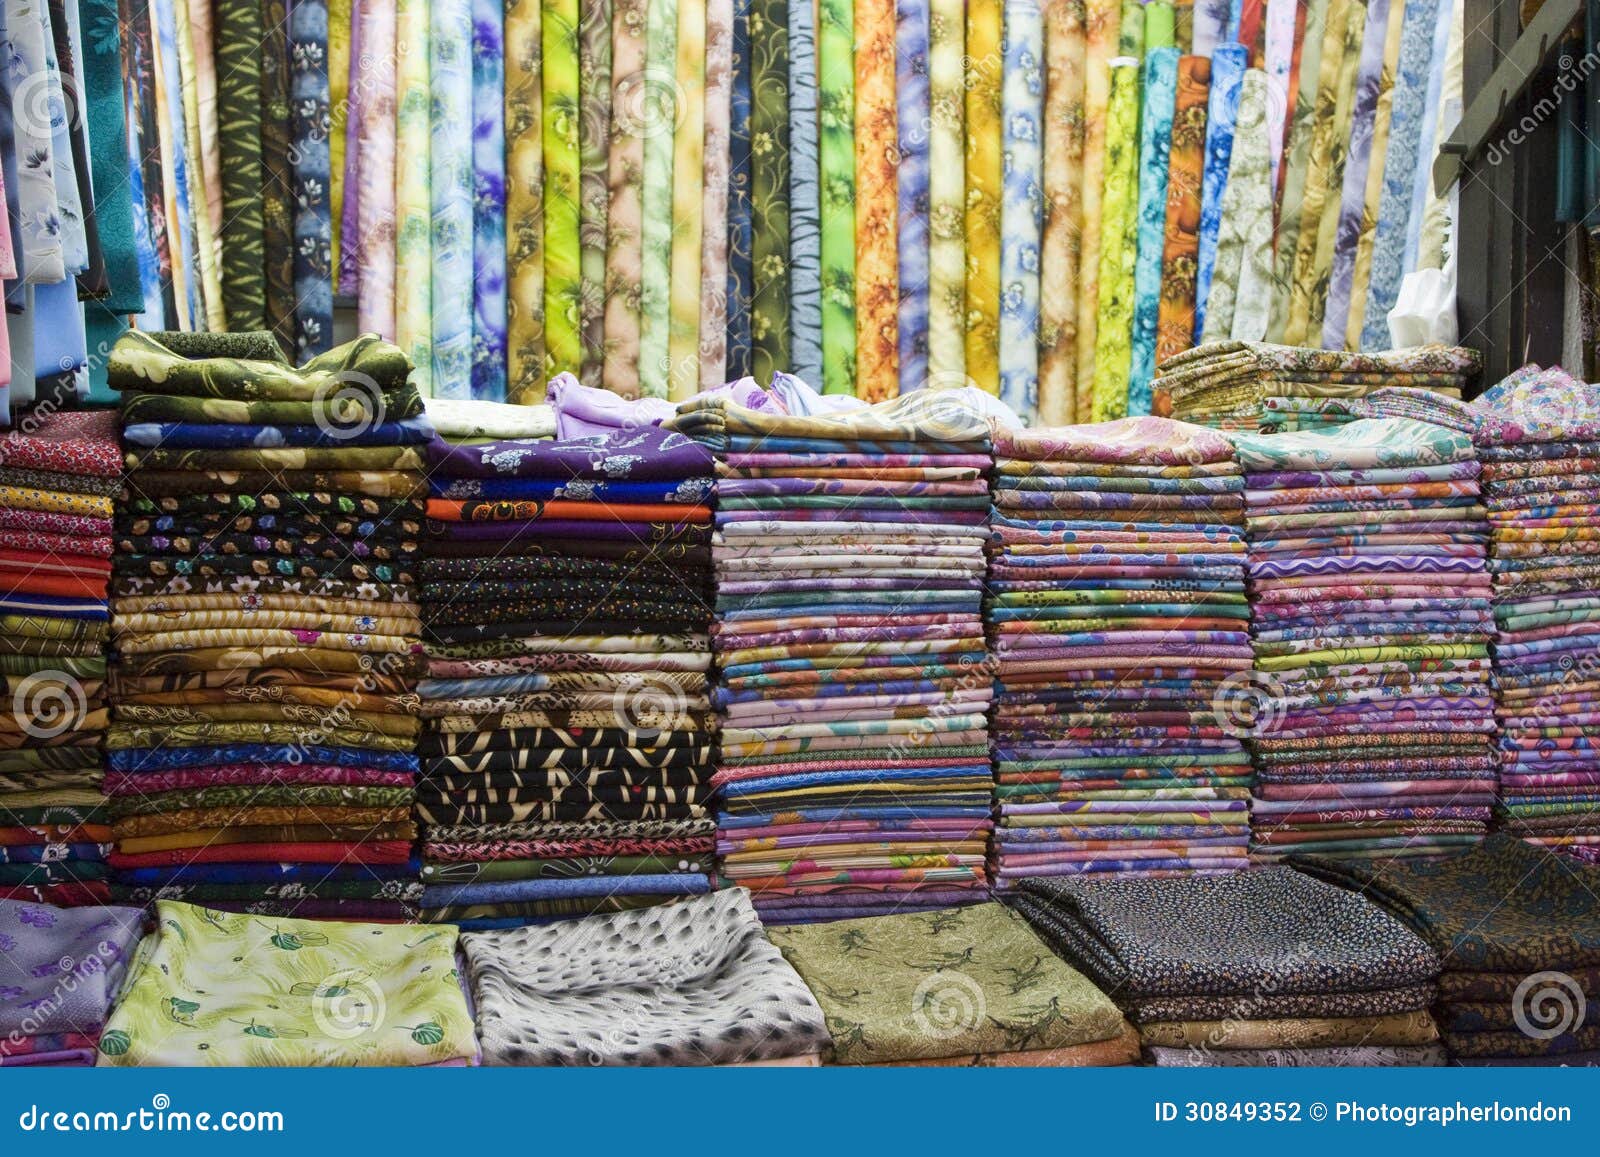 dubai uae colorful fabrics are displayed for sale at the al naif souq in deira.